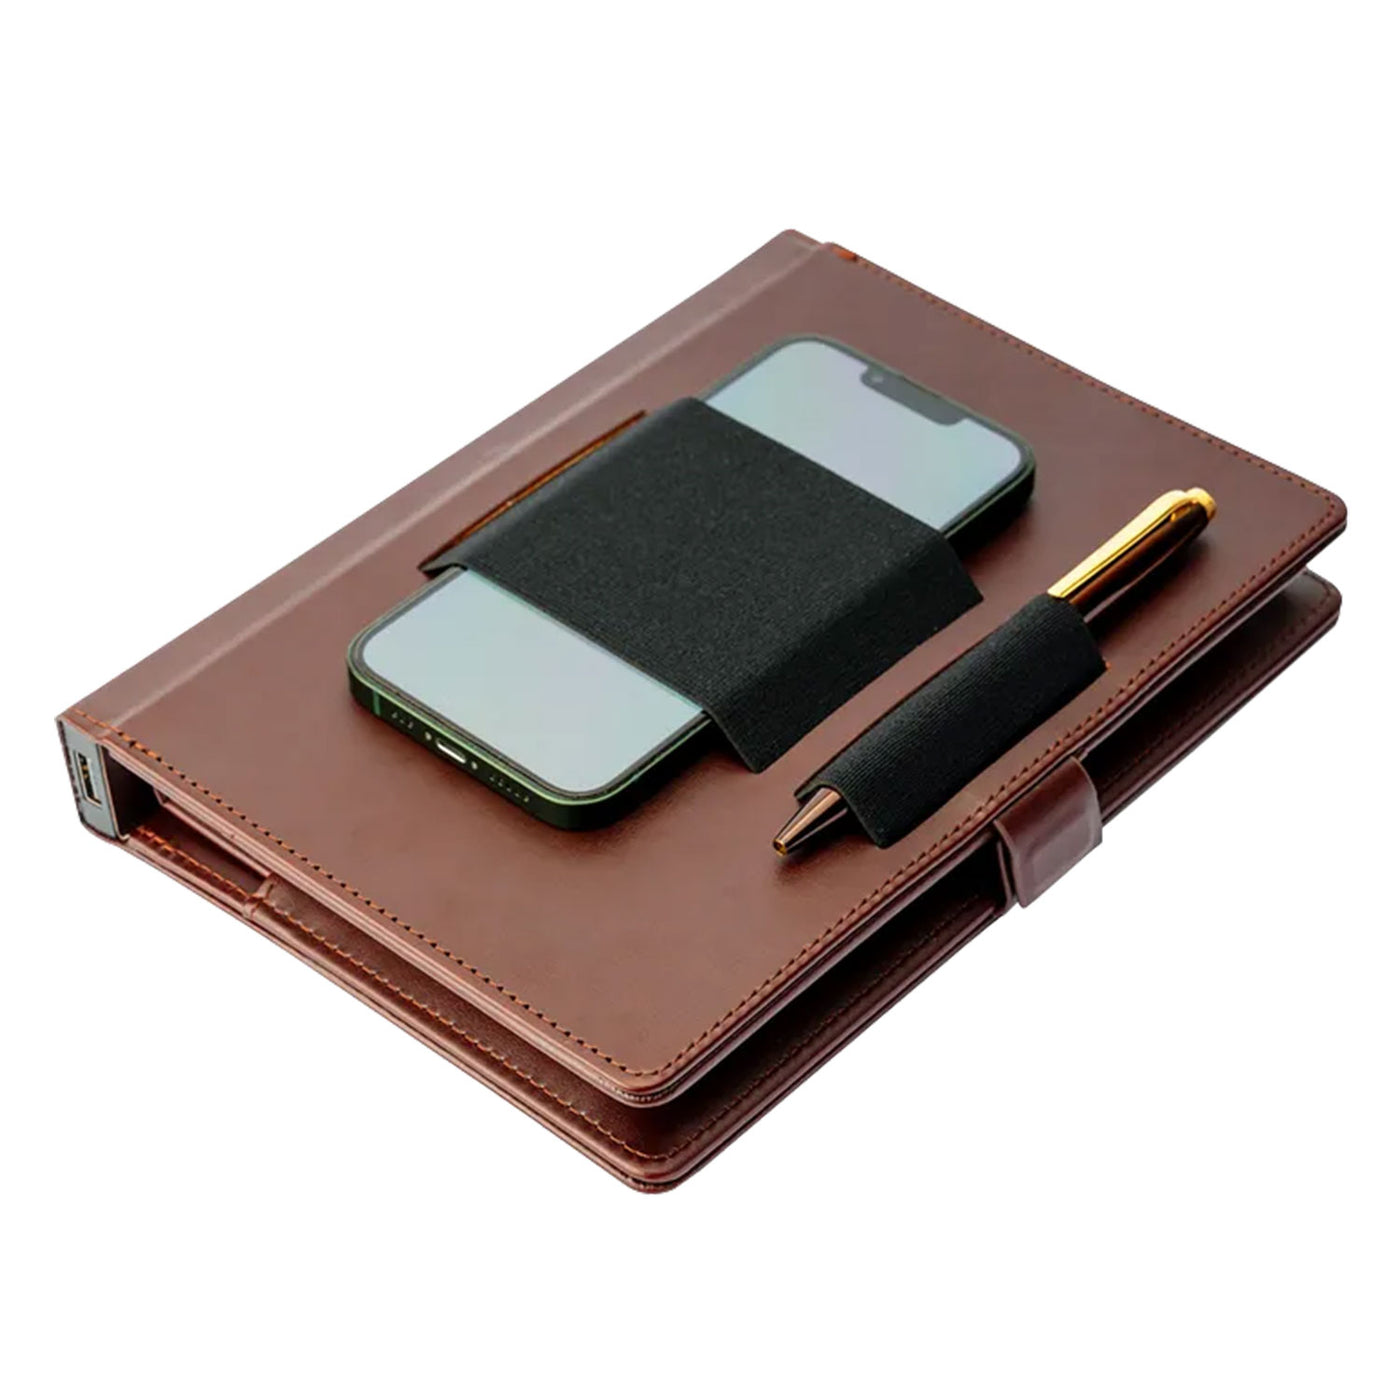 Pennline Superbook Edge Organizer with Fast Wireless Charging + 8000 mAh Powerbank - Brown 1